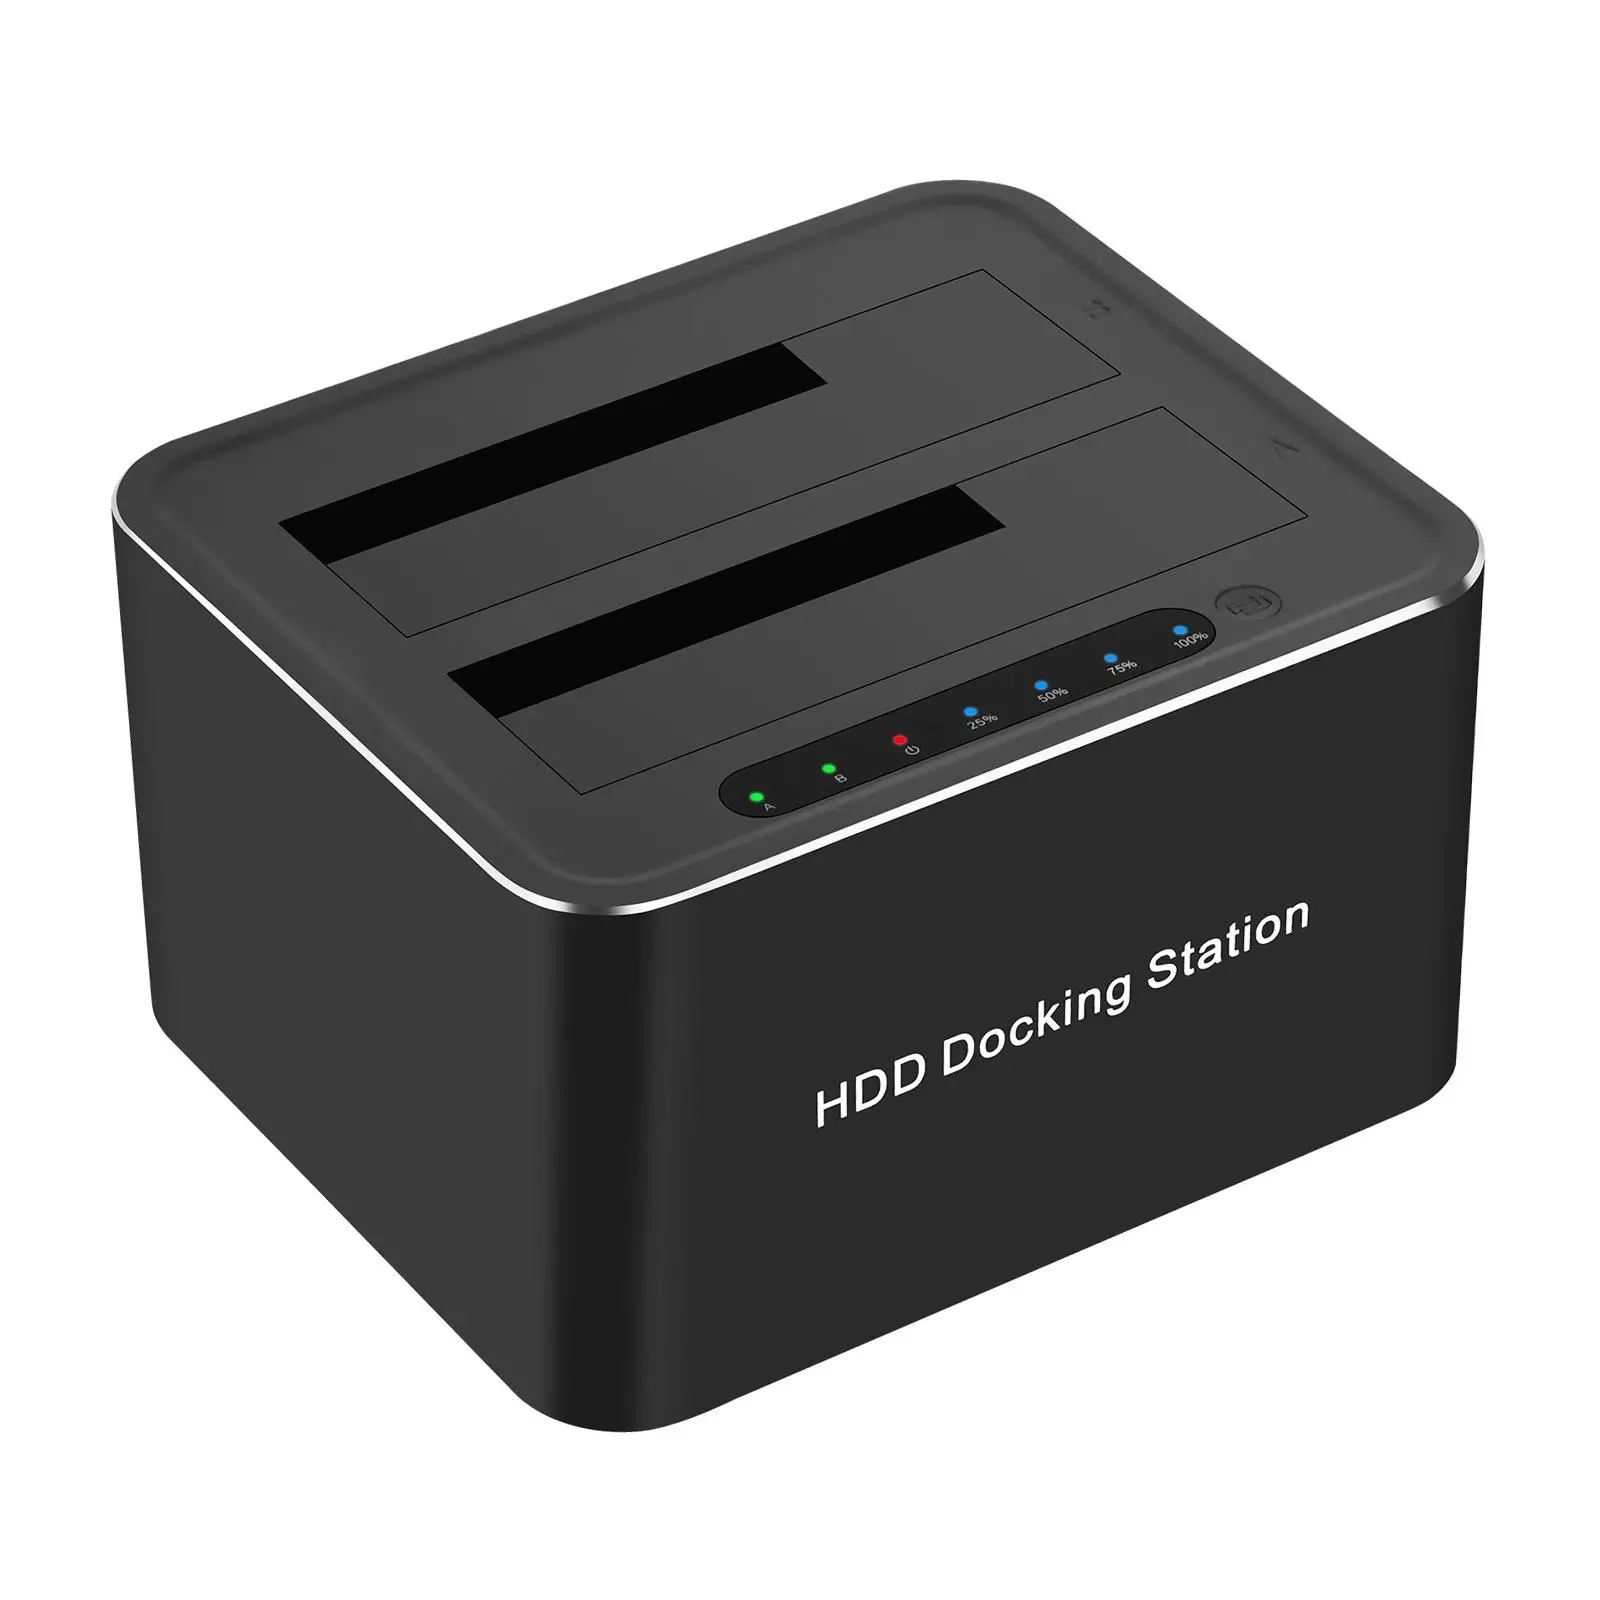 USB 3.0 to SATA Hard Drive Docking Station UK for 2.5